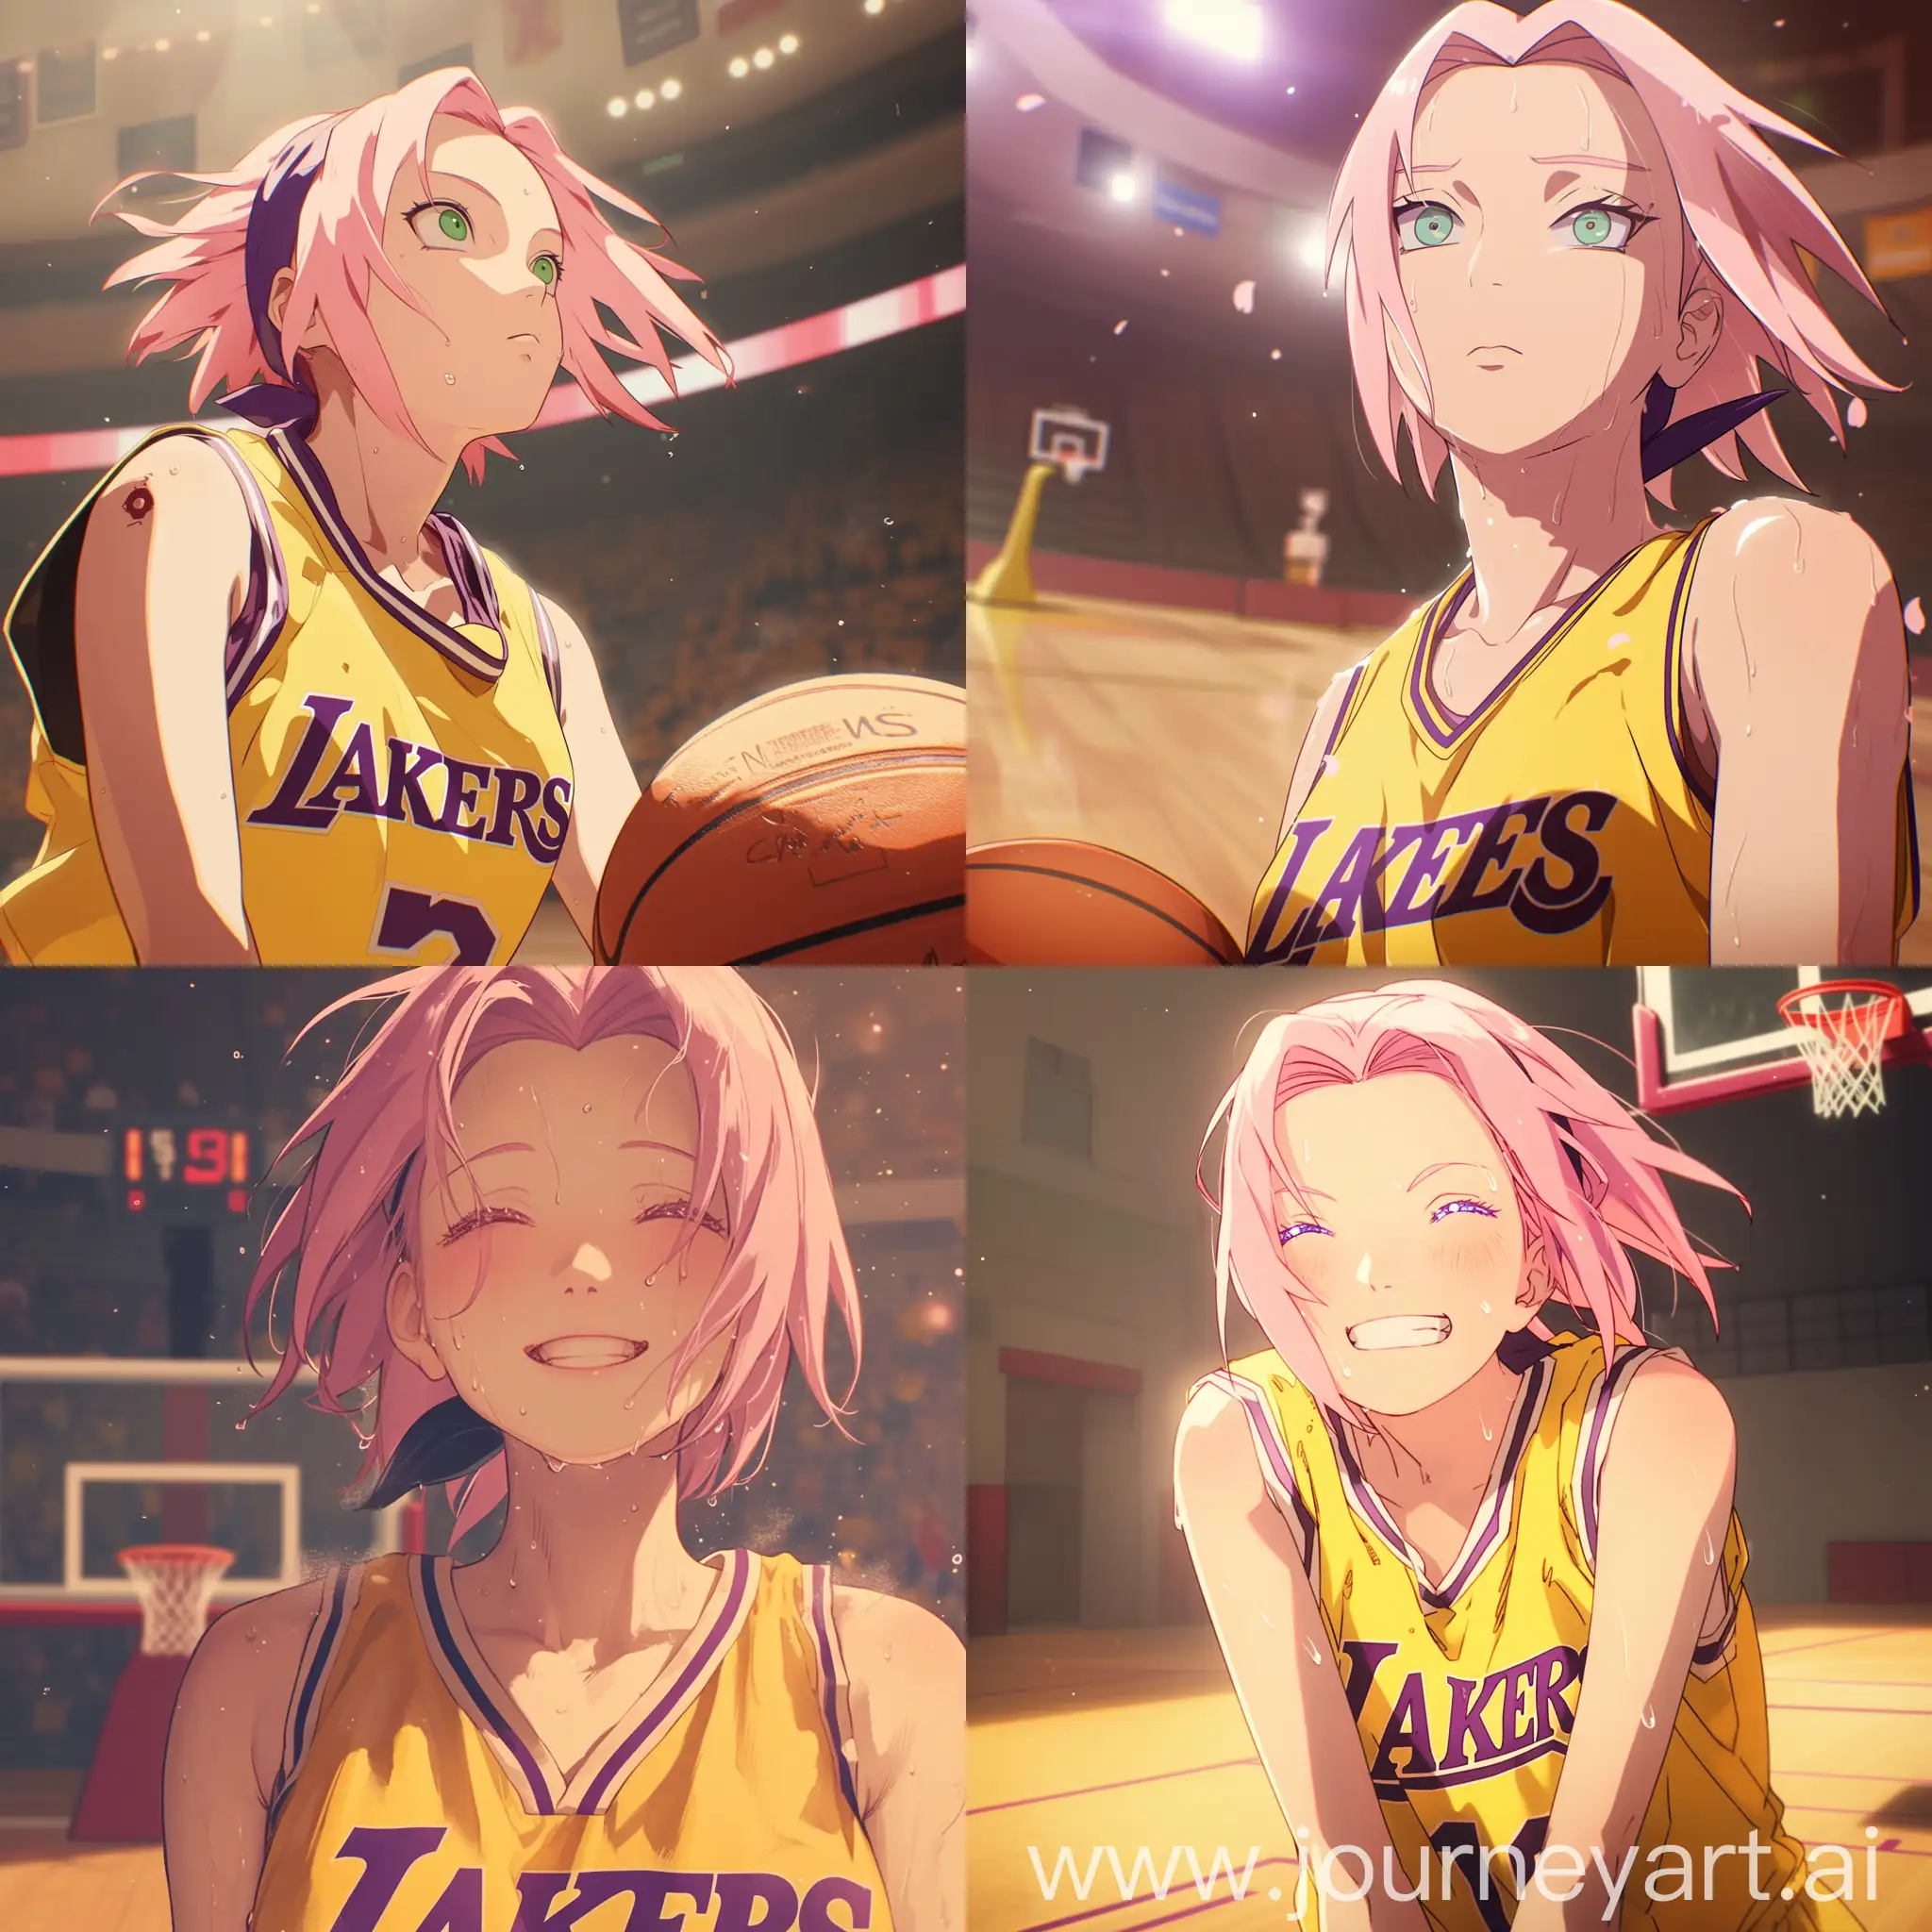 photo screenshot from anime, Sakura Haruno from Naruto anime, yellow basketball uniform "LAKERS", sweat, basketball court --niji 6